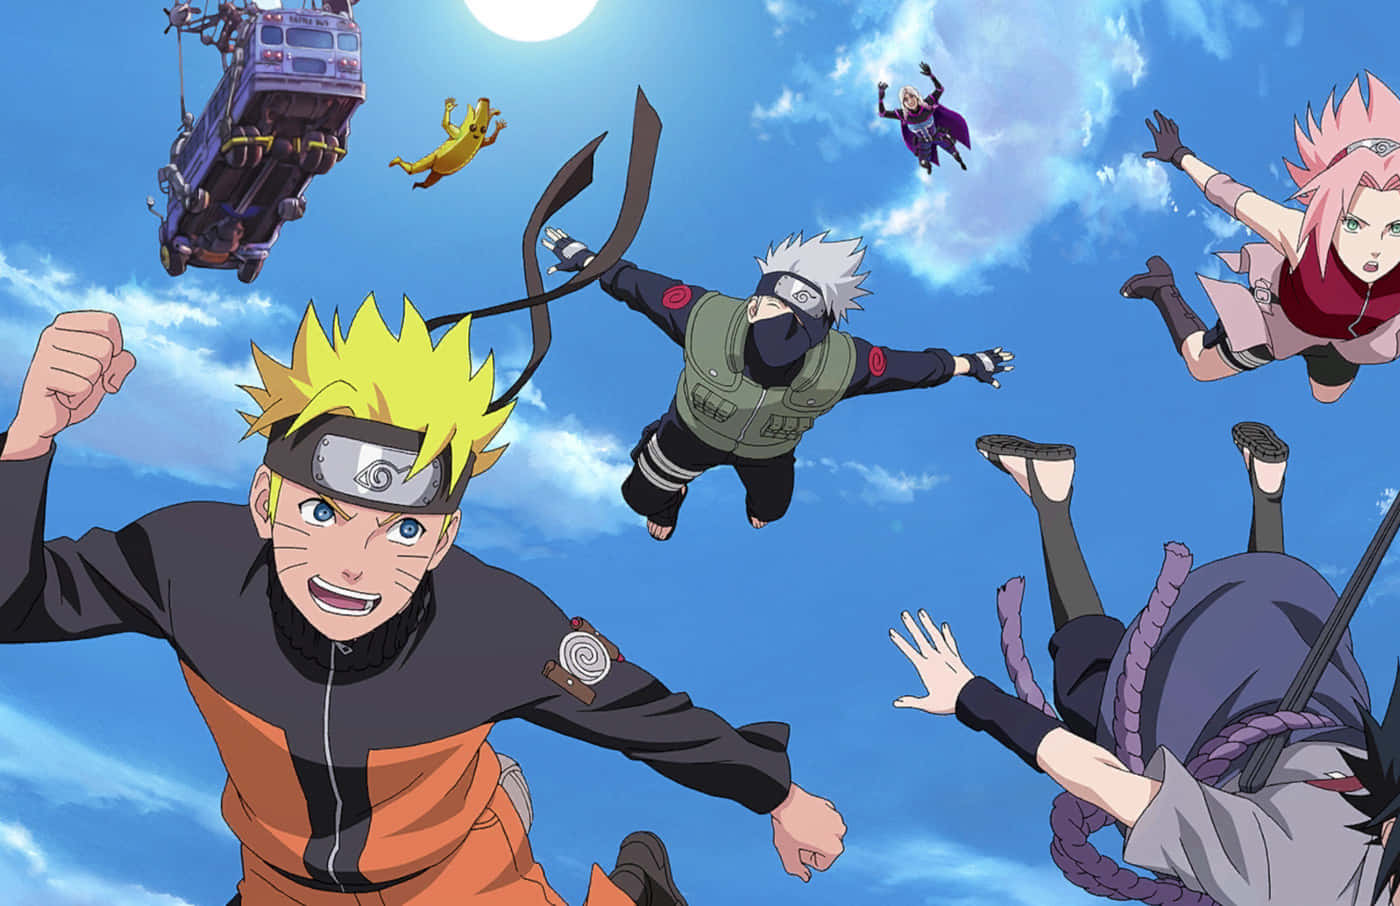 Naruto and his team of ninja fight against powerful enemies in Konoha.